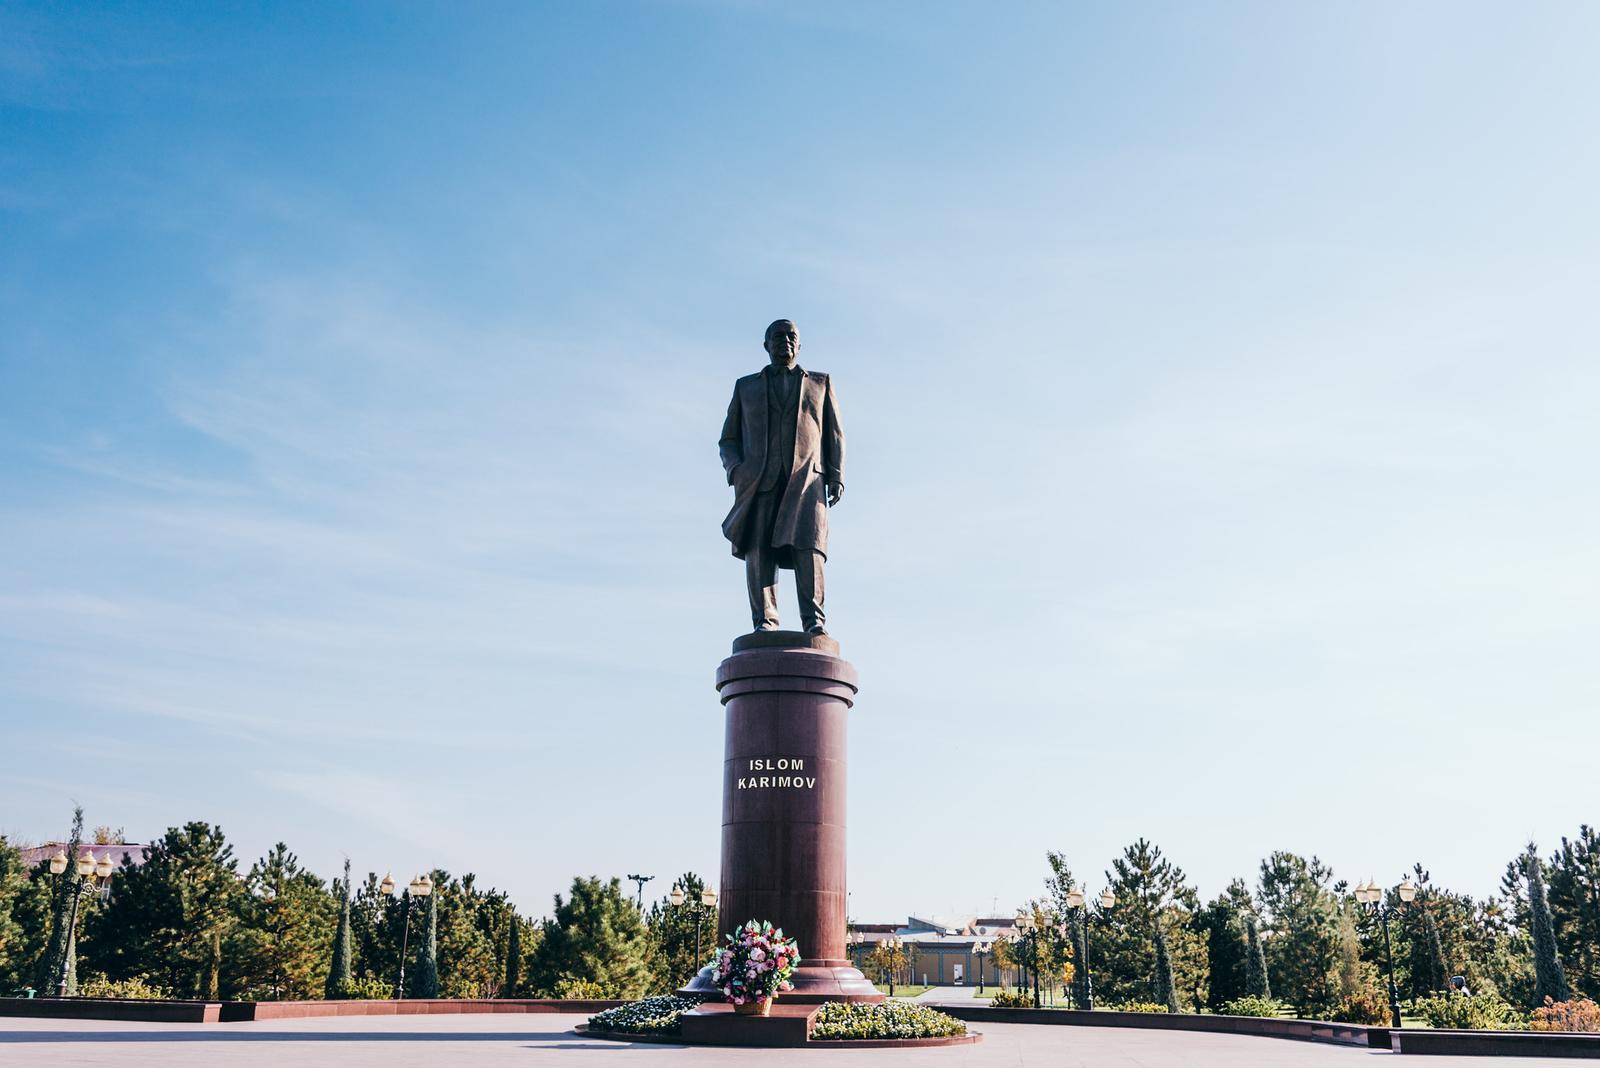 Islom Karimov Memorial Statue